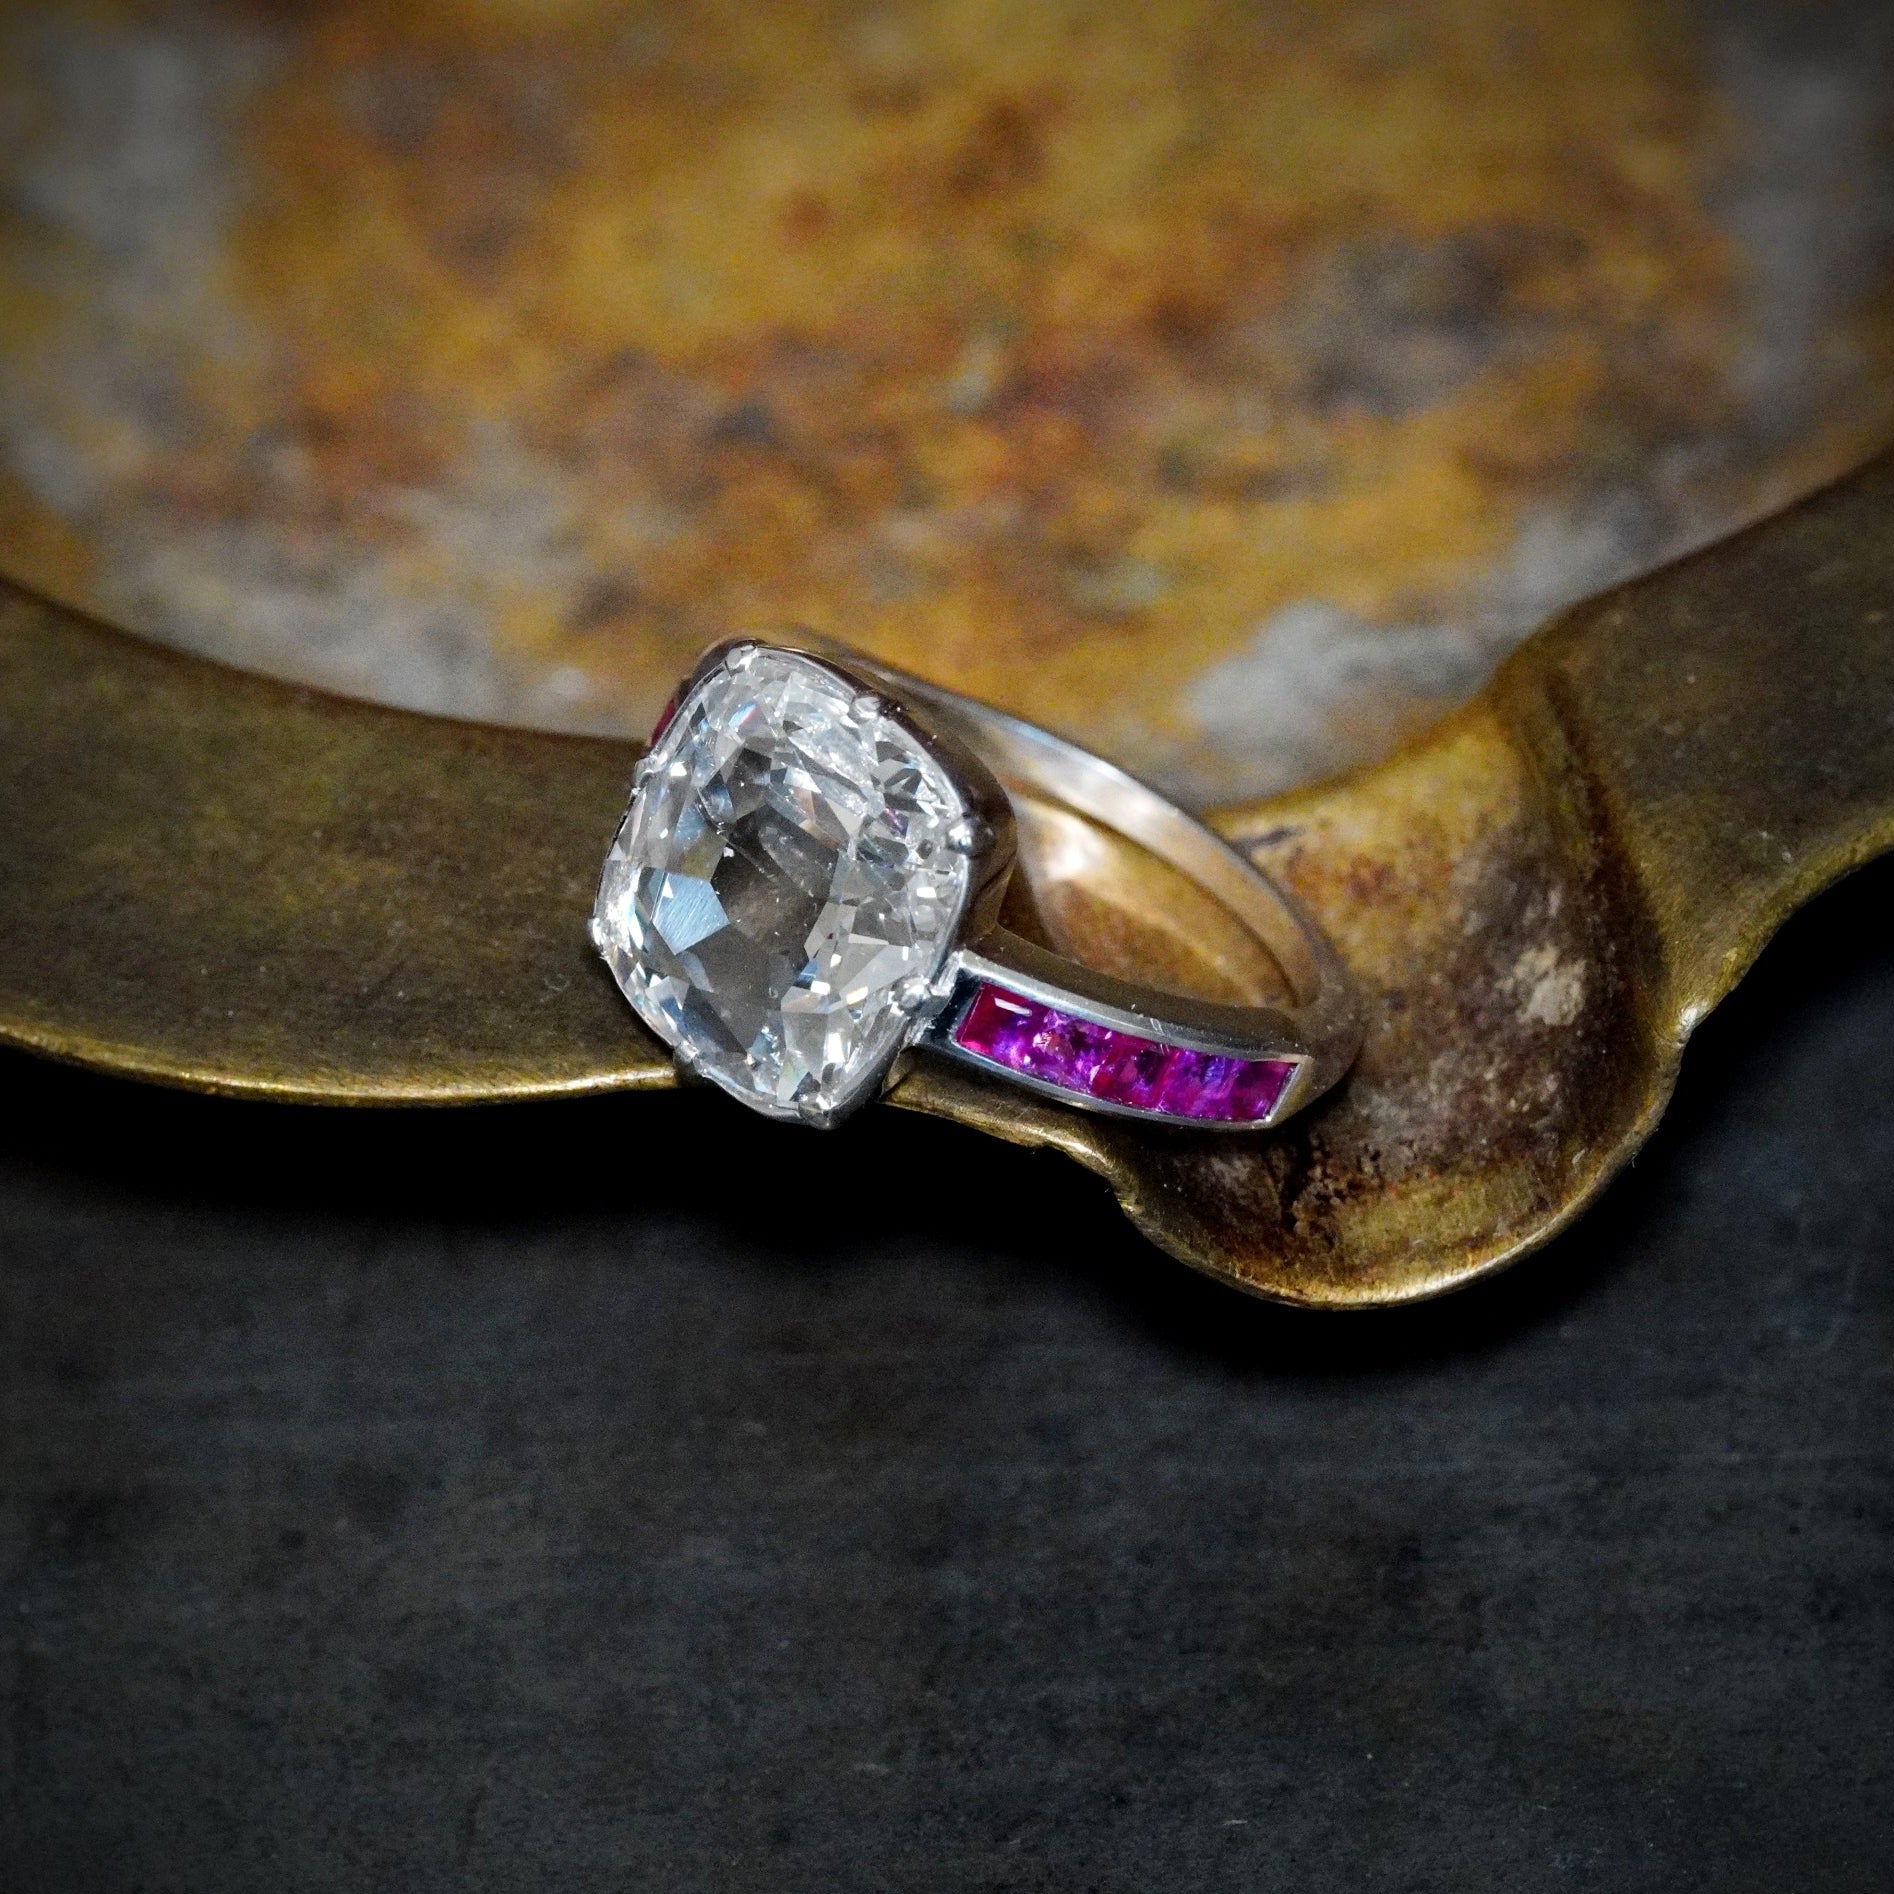 Victorian Inspired 3.00-Carat Flat Cushion Cut Diamond Ring with Burma No Heat Rubies